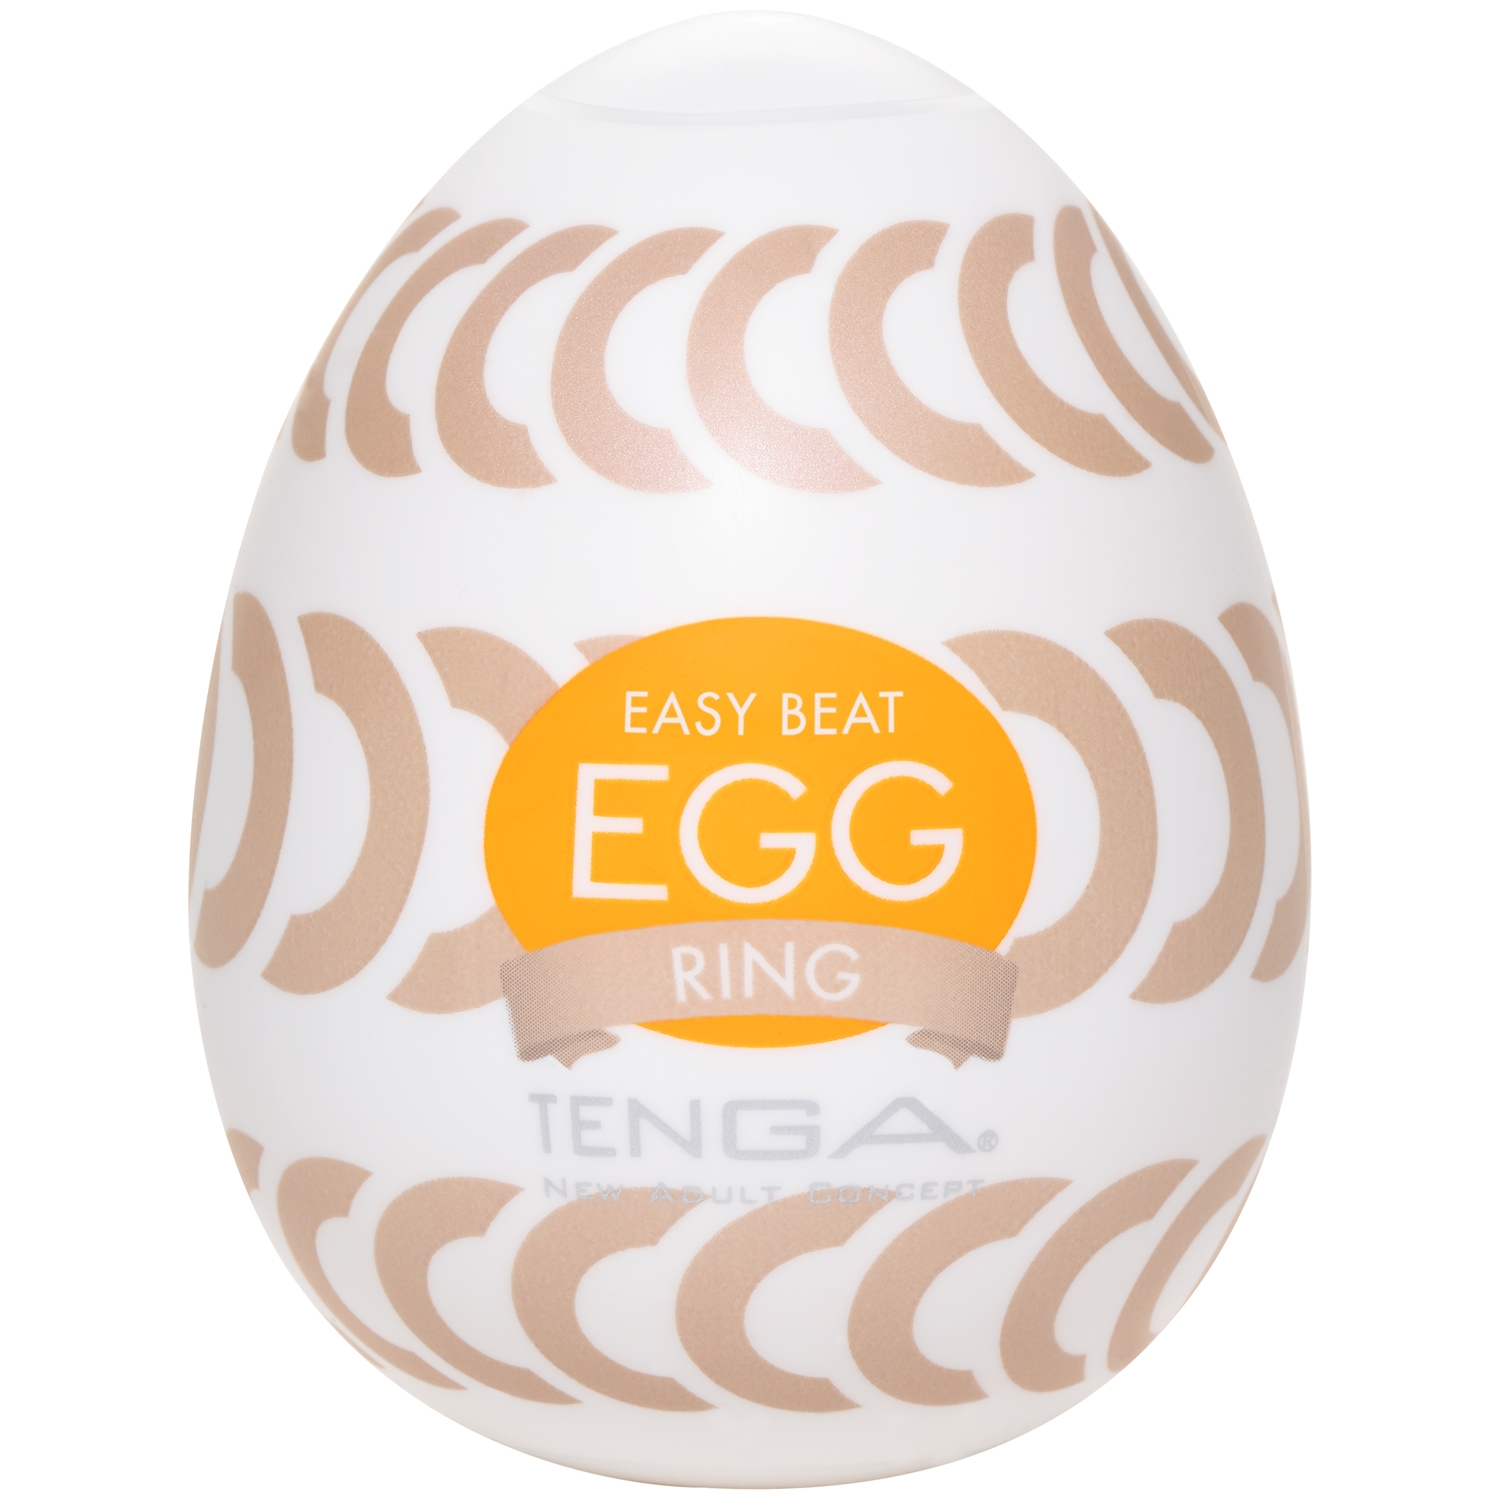 TENGA Egg Ring Masturbator - Vit | Män//Onaniprodukter//TENGA//Handjob Stroker//TENGA Egg//Priser från 49 kr | Intimast